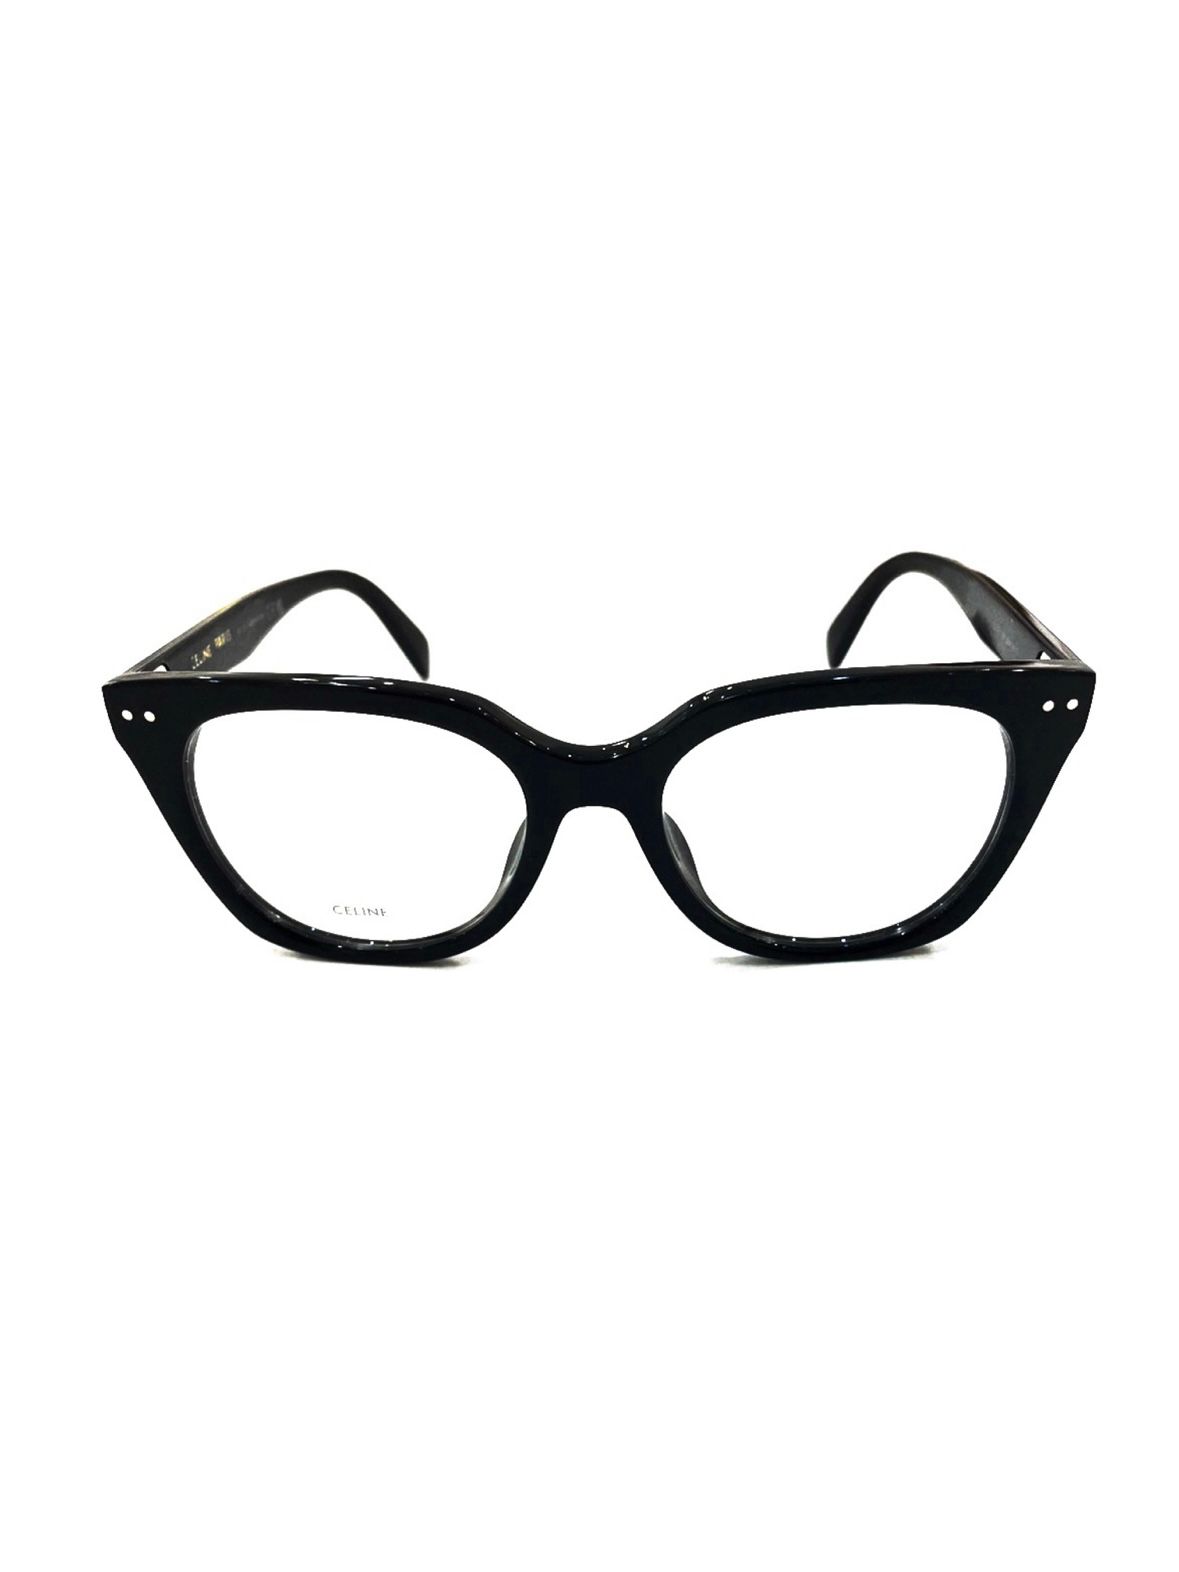 Celine glasses + bag \u003e\u003e  眼鏡サイズ表記を教えて下さい